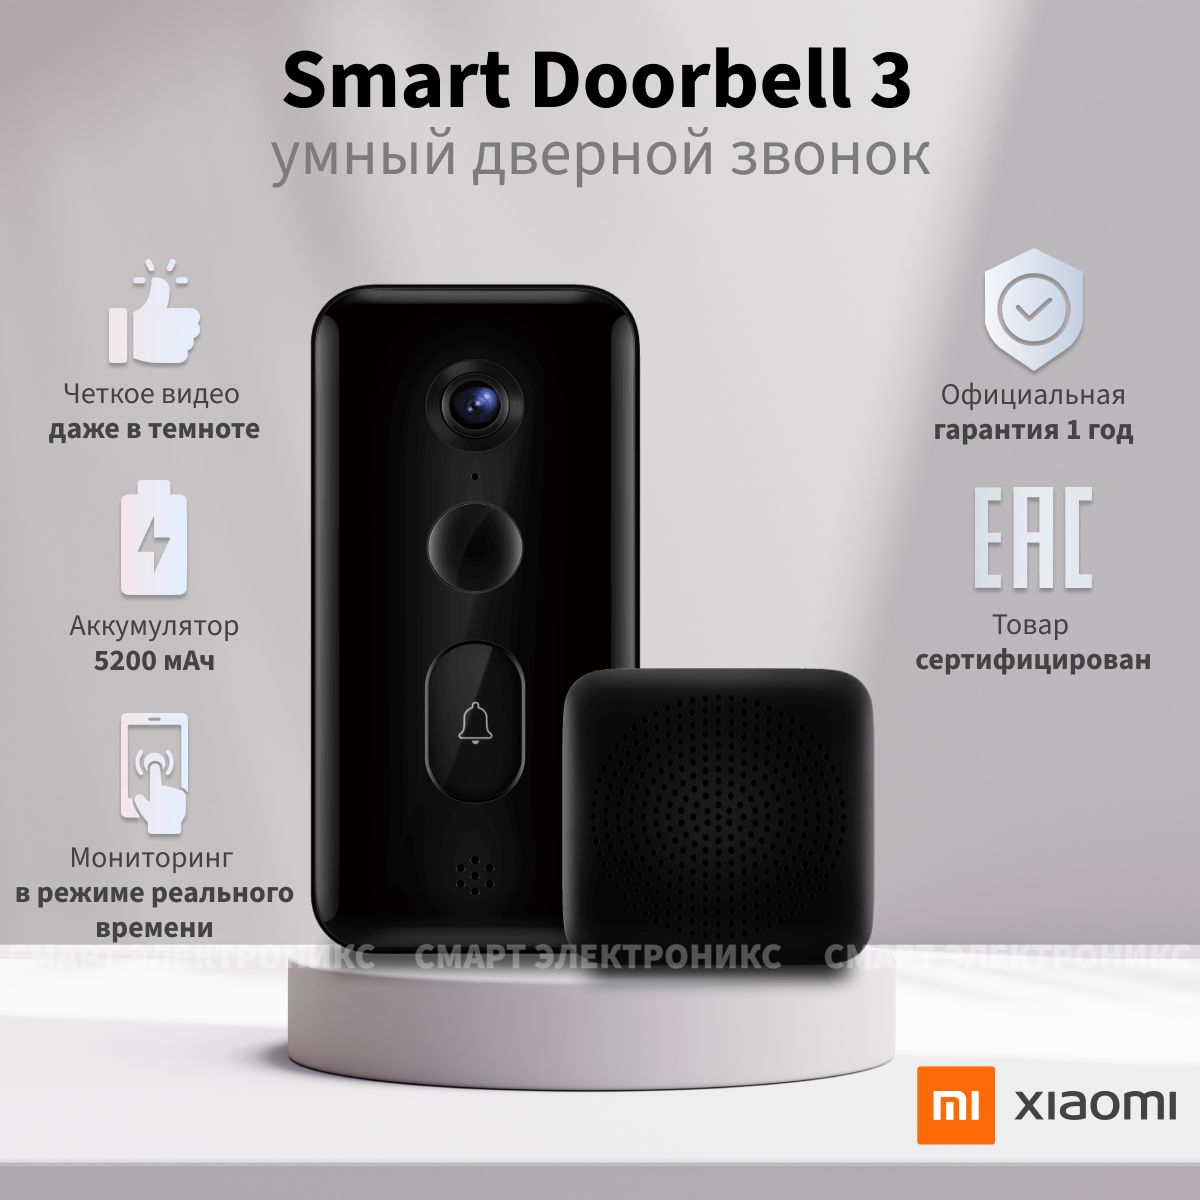 Xiaomi Smart Doorbell 3 mjml06-FJ. Звонок дверной Xiaomi Smart Doorbell 3. Умный дверной звонок Xiaomi Smart Doorbell 3 черный bhr5416gl. Домофон Xiaomi. Звонок xiaomi doorbell 3